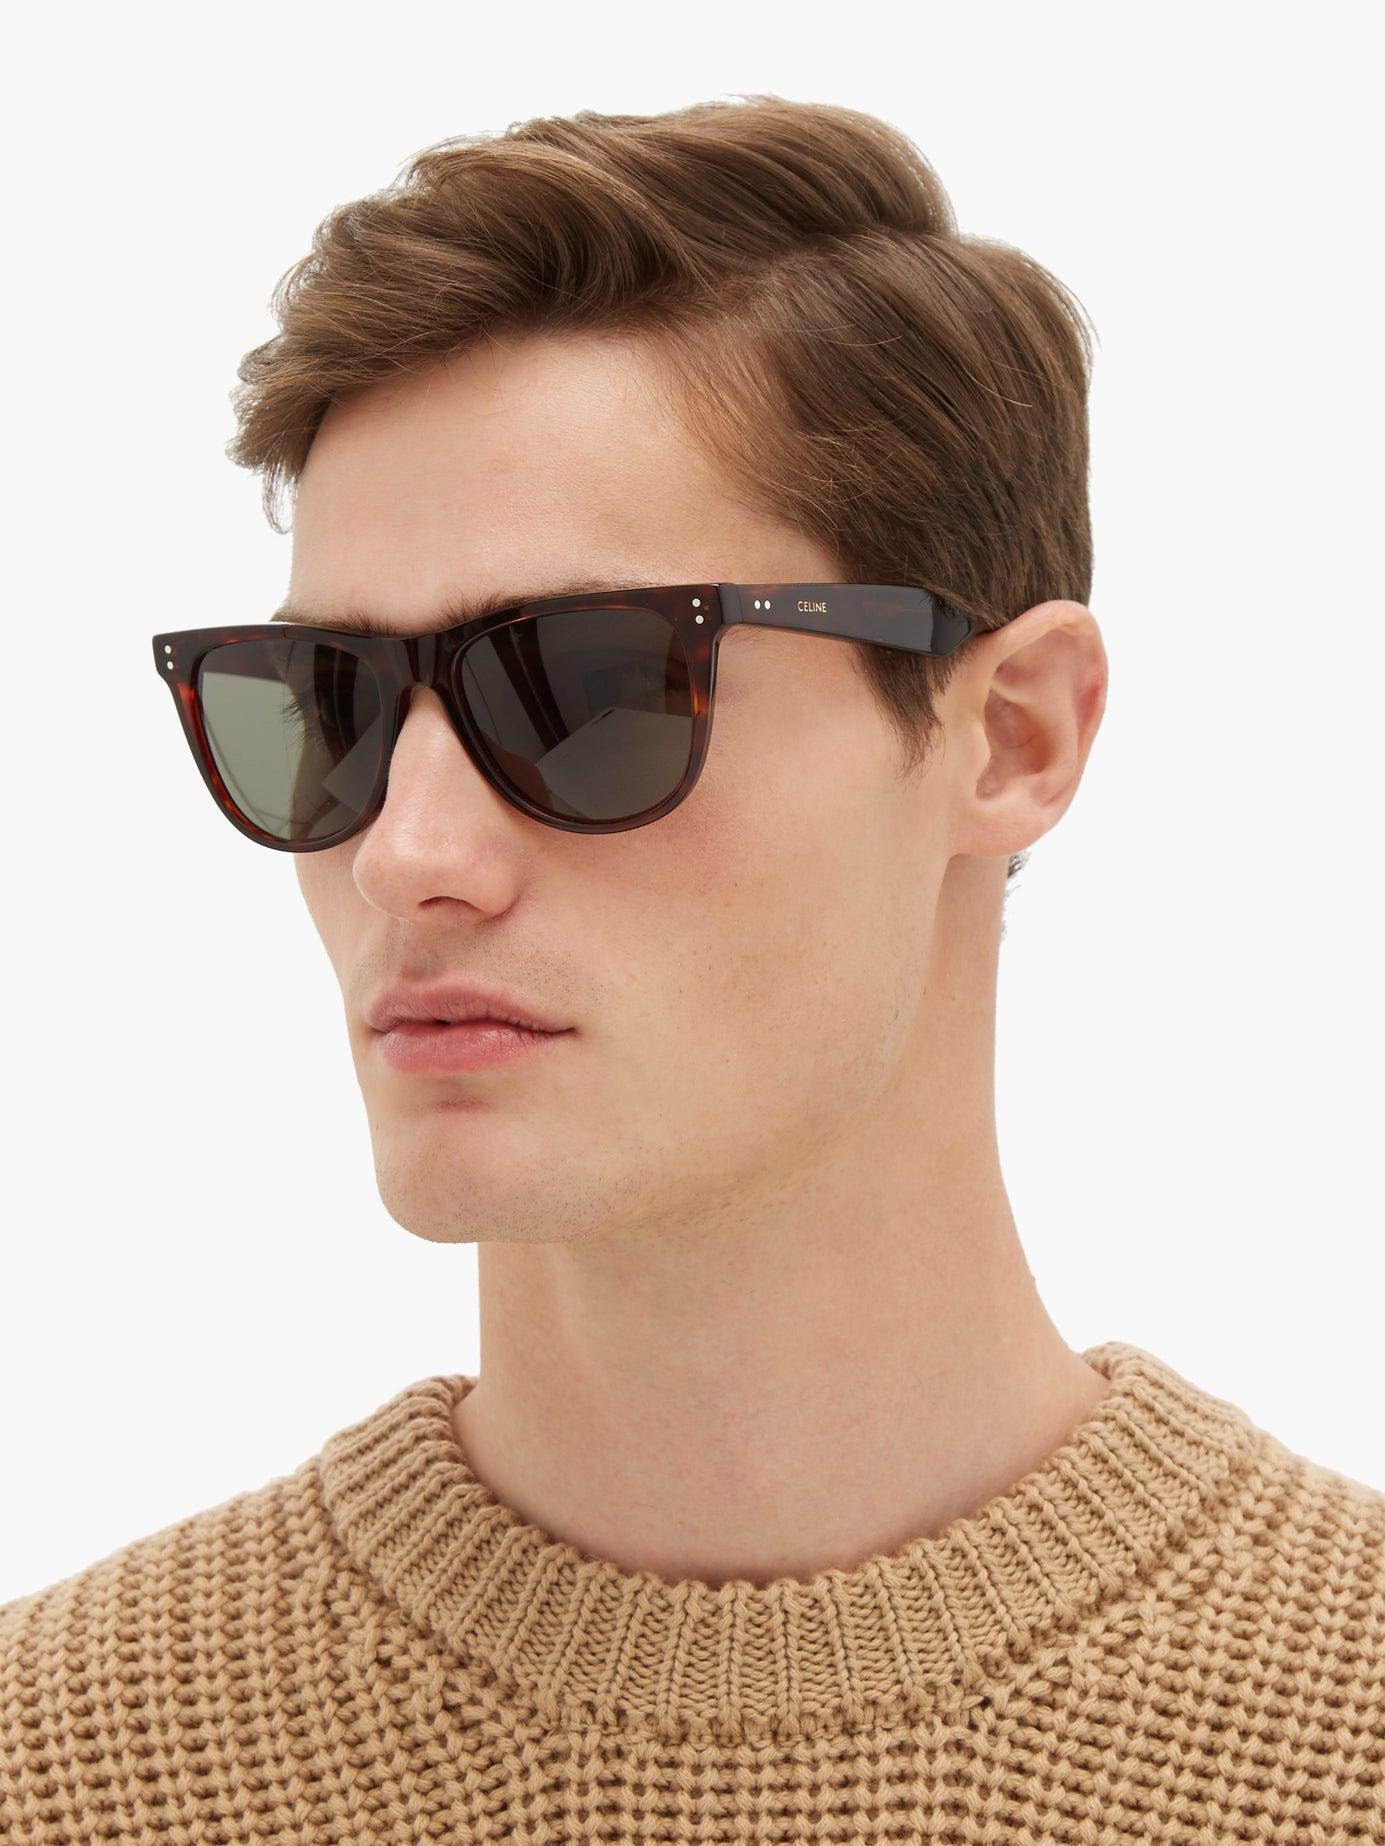 CELINE HOMME Square-Frame Acetate Sunglasses for Men